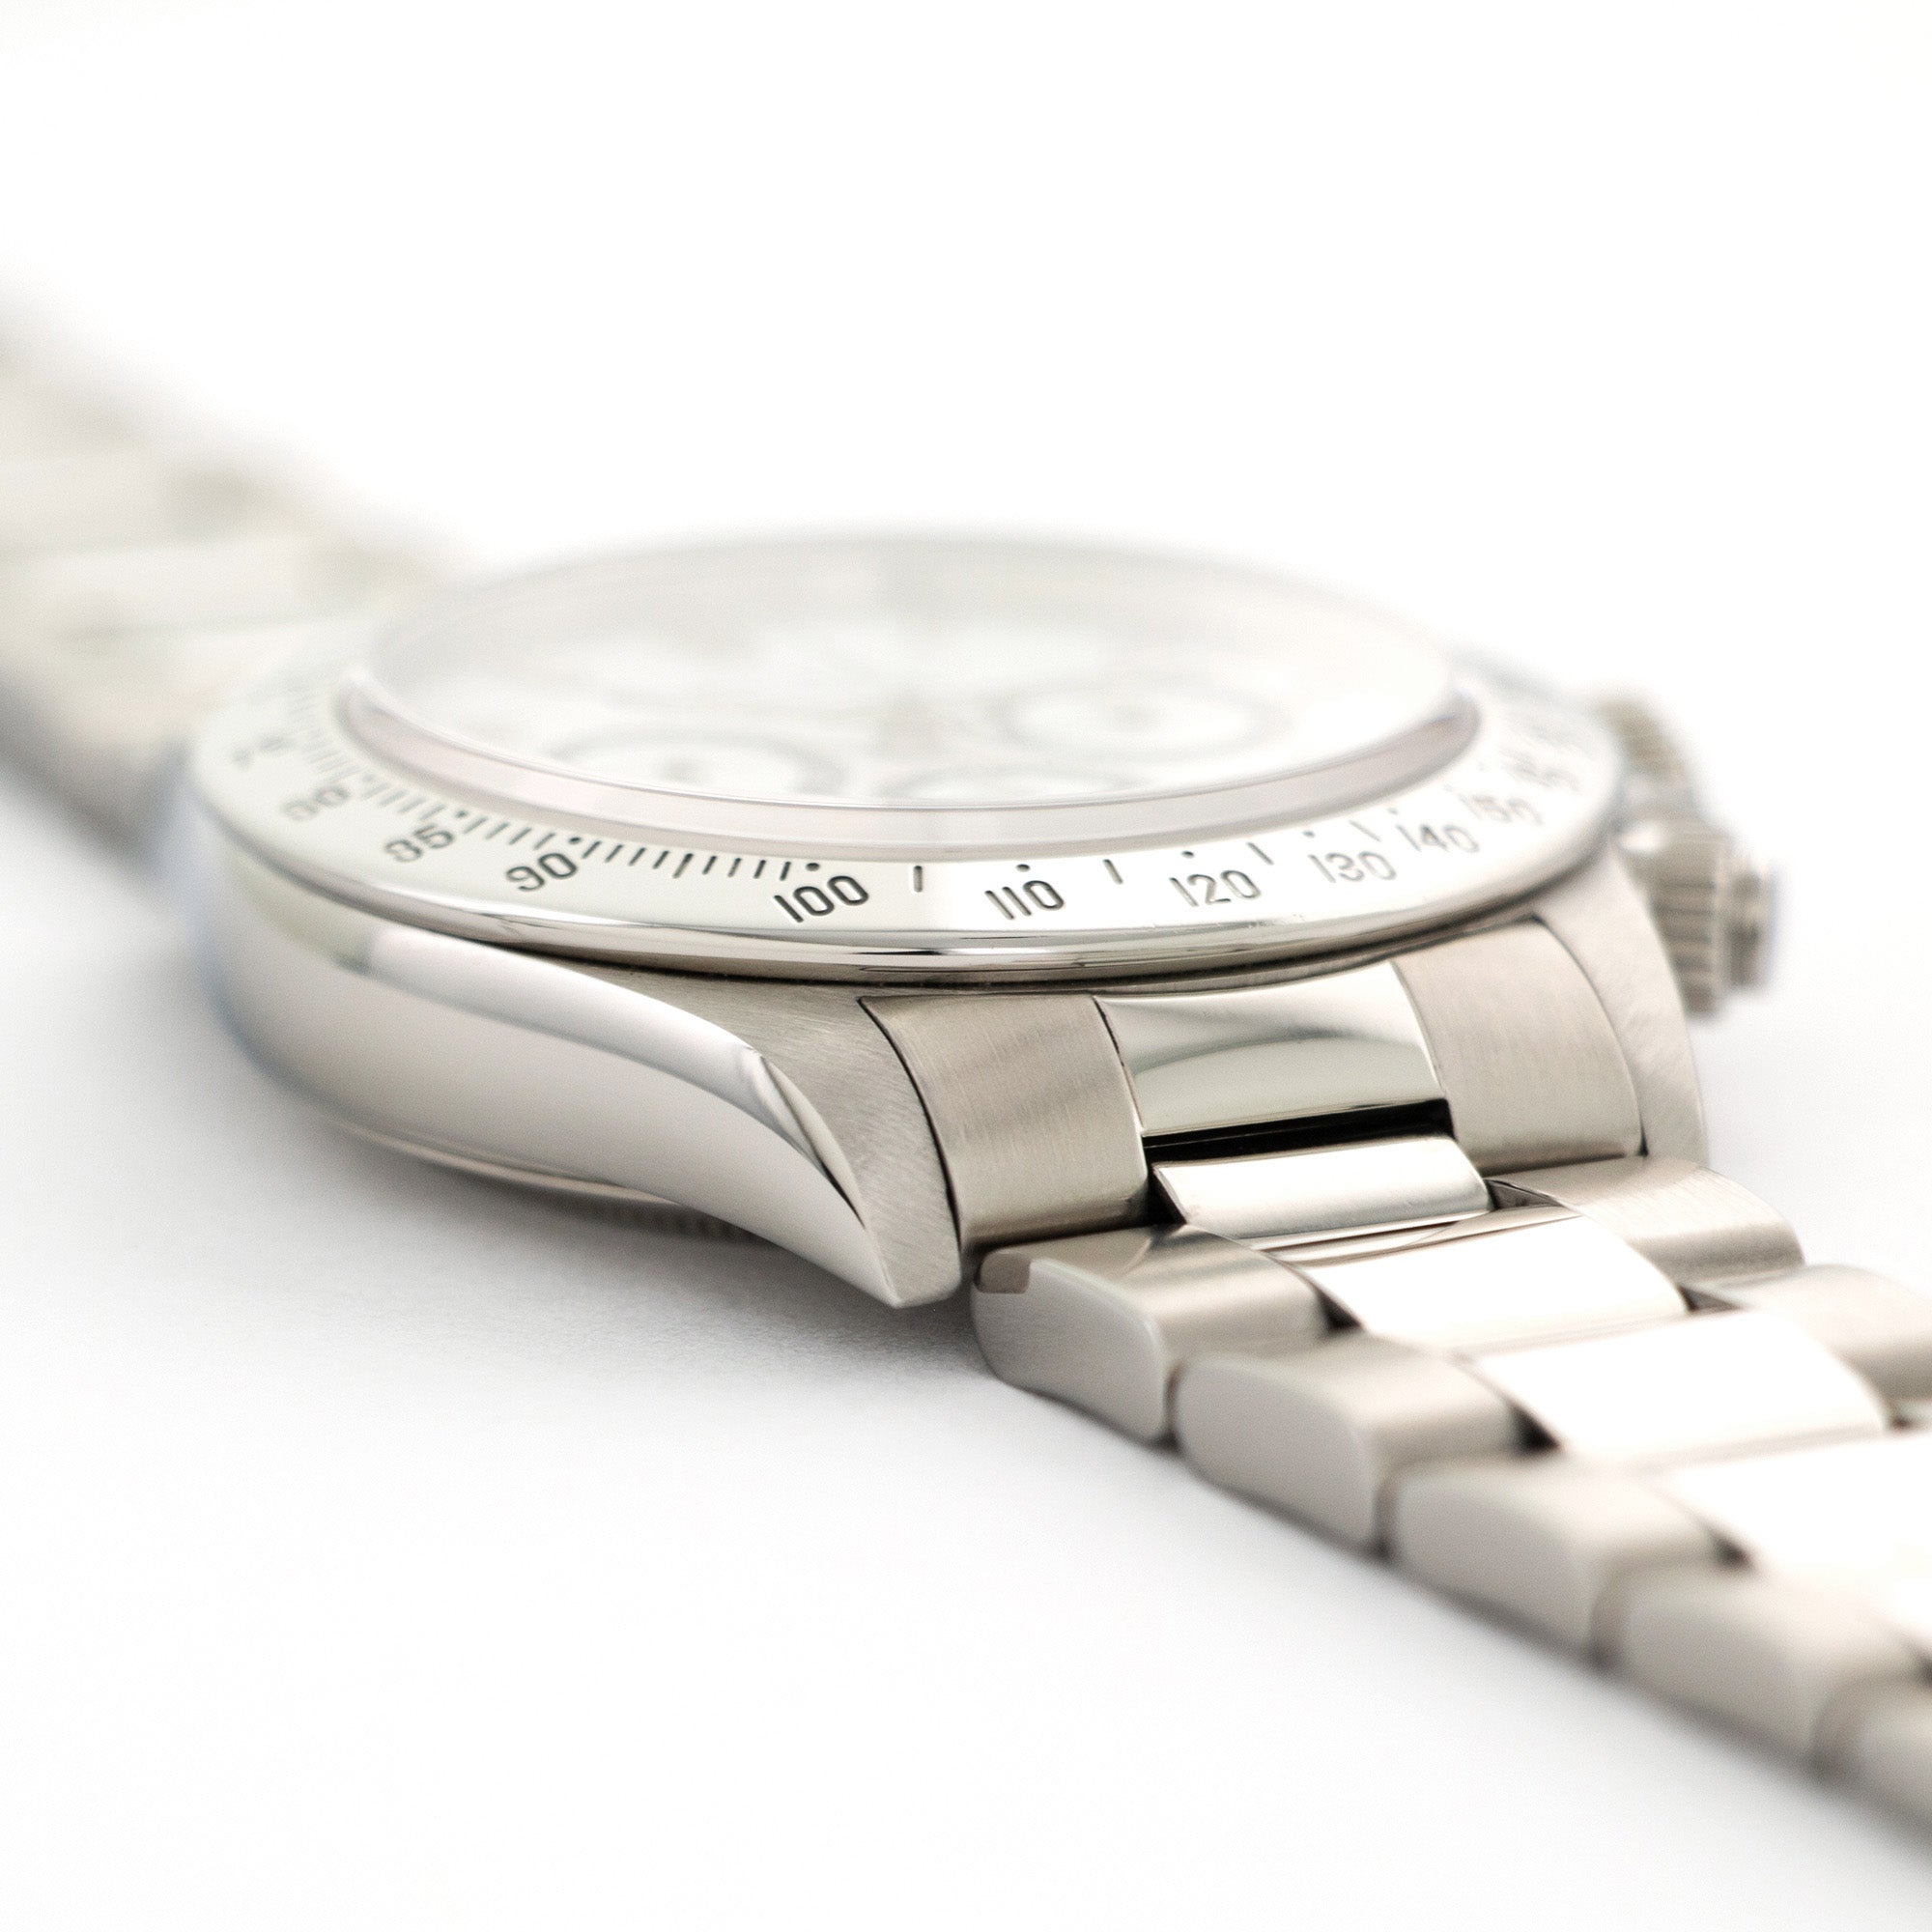 Rolex - Rolex Cosmograph Zenith Daytona Watch Ref. 16520 - The Keystone Watches